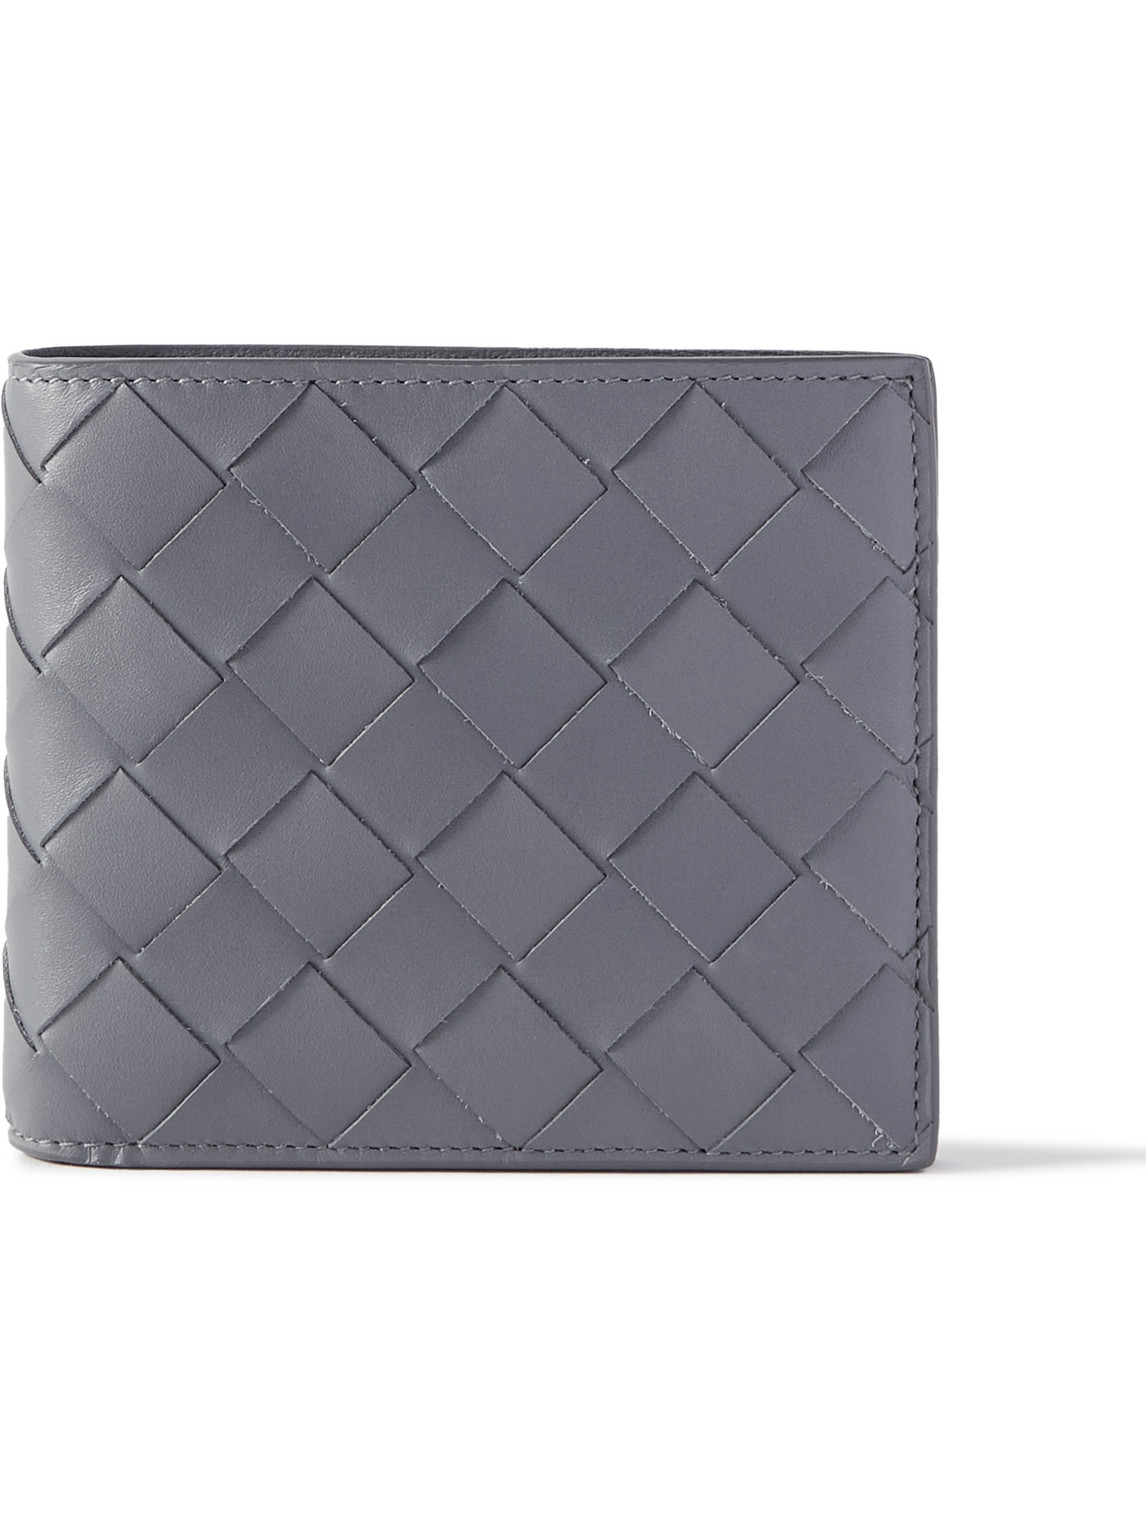 Bottega Veneta - Intrecciato Leather Billfold Wallet - Men - Gray for Men